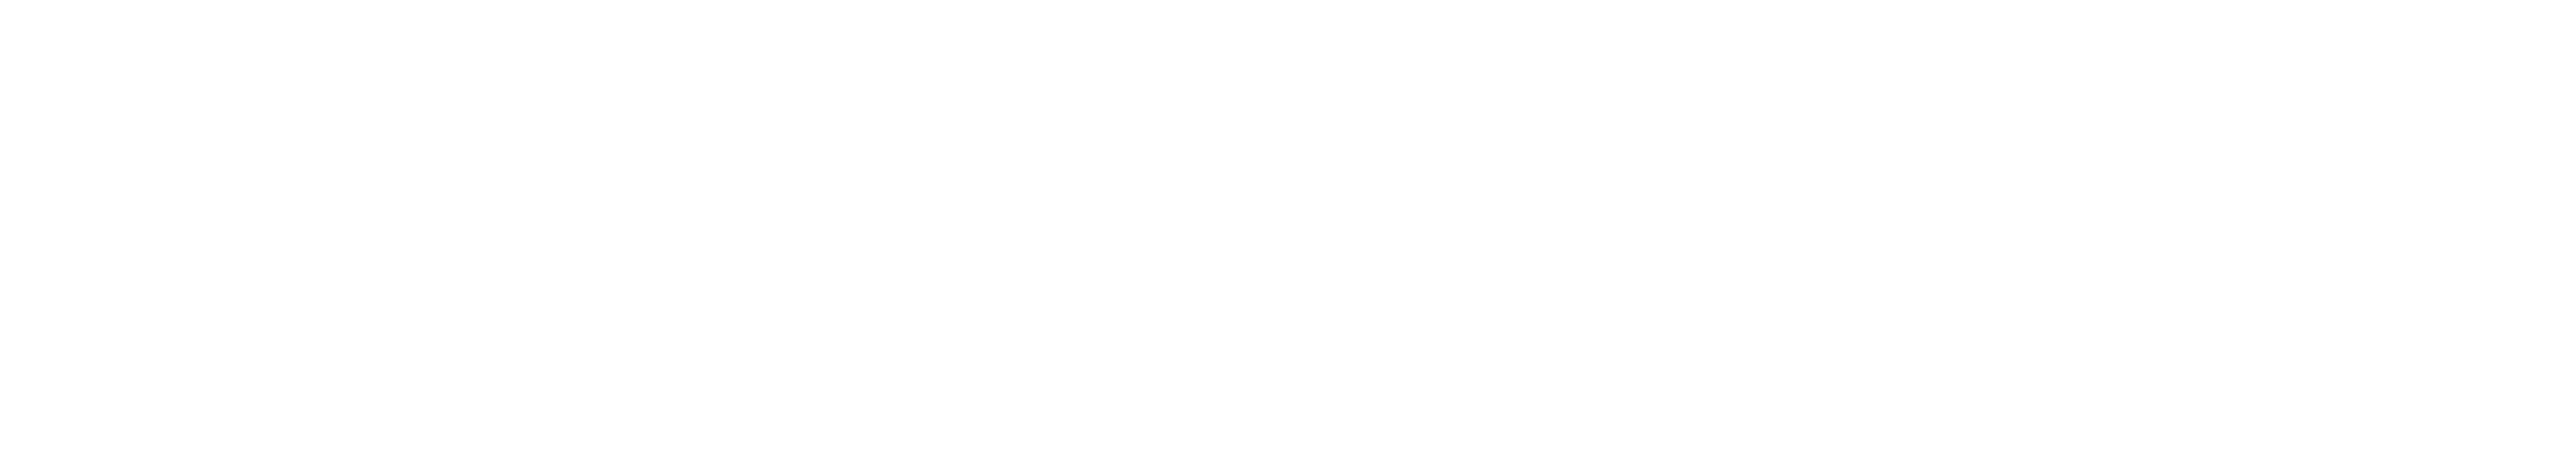 CoNfluence-logo-gradient-white-attribution_rgb@2x-03